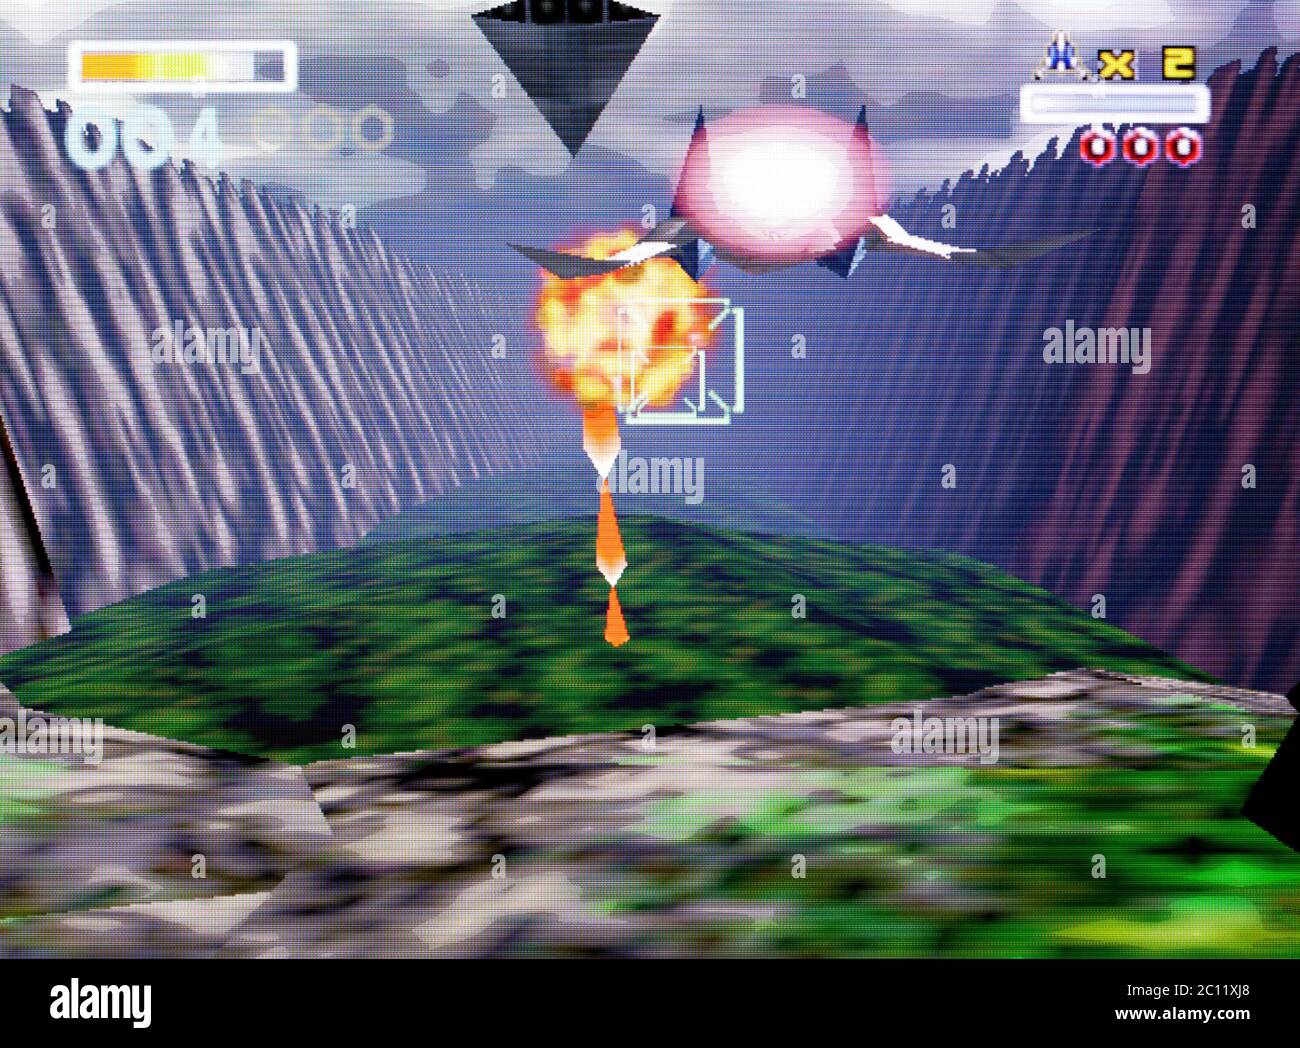 Starfox 64 Star Fox - Nintendo 64 Videogame - Editorial use only Stock  Photo - Alamy